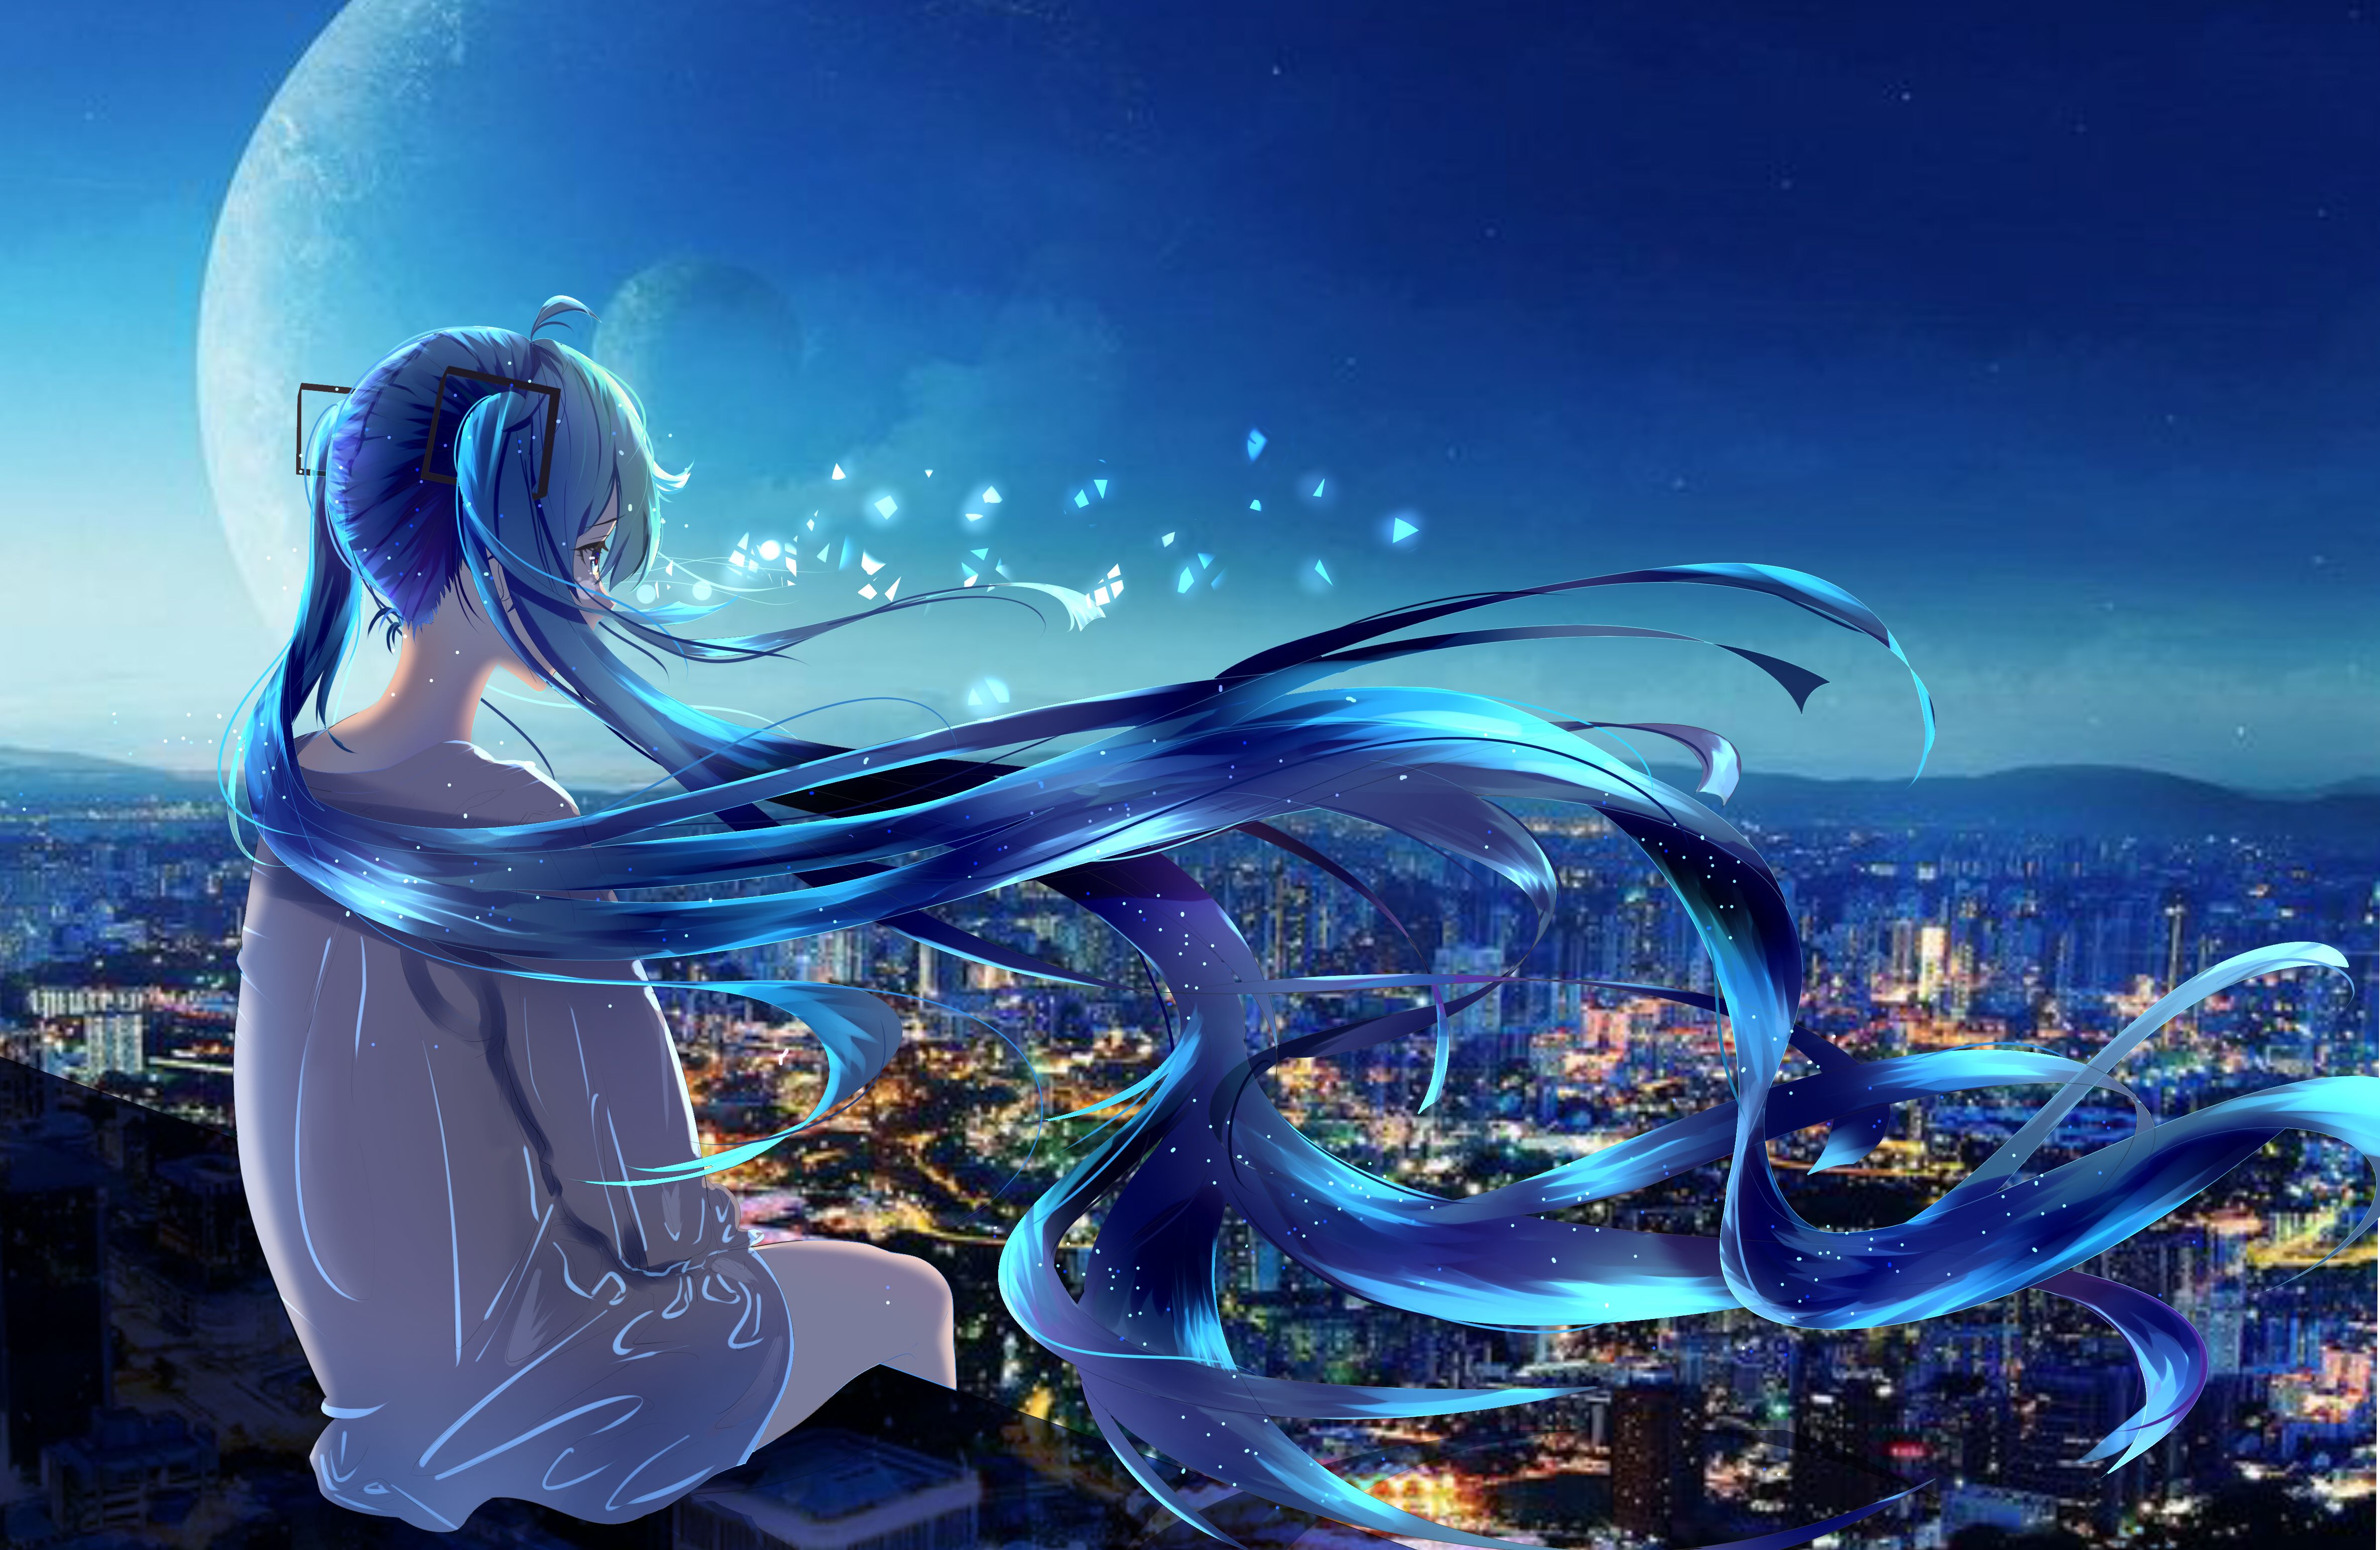 Anime background wallpaper, Blue anime, Anime background